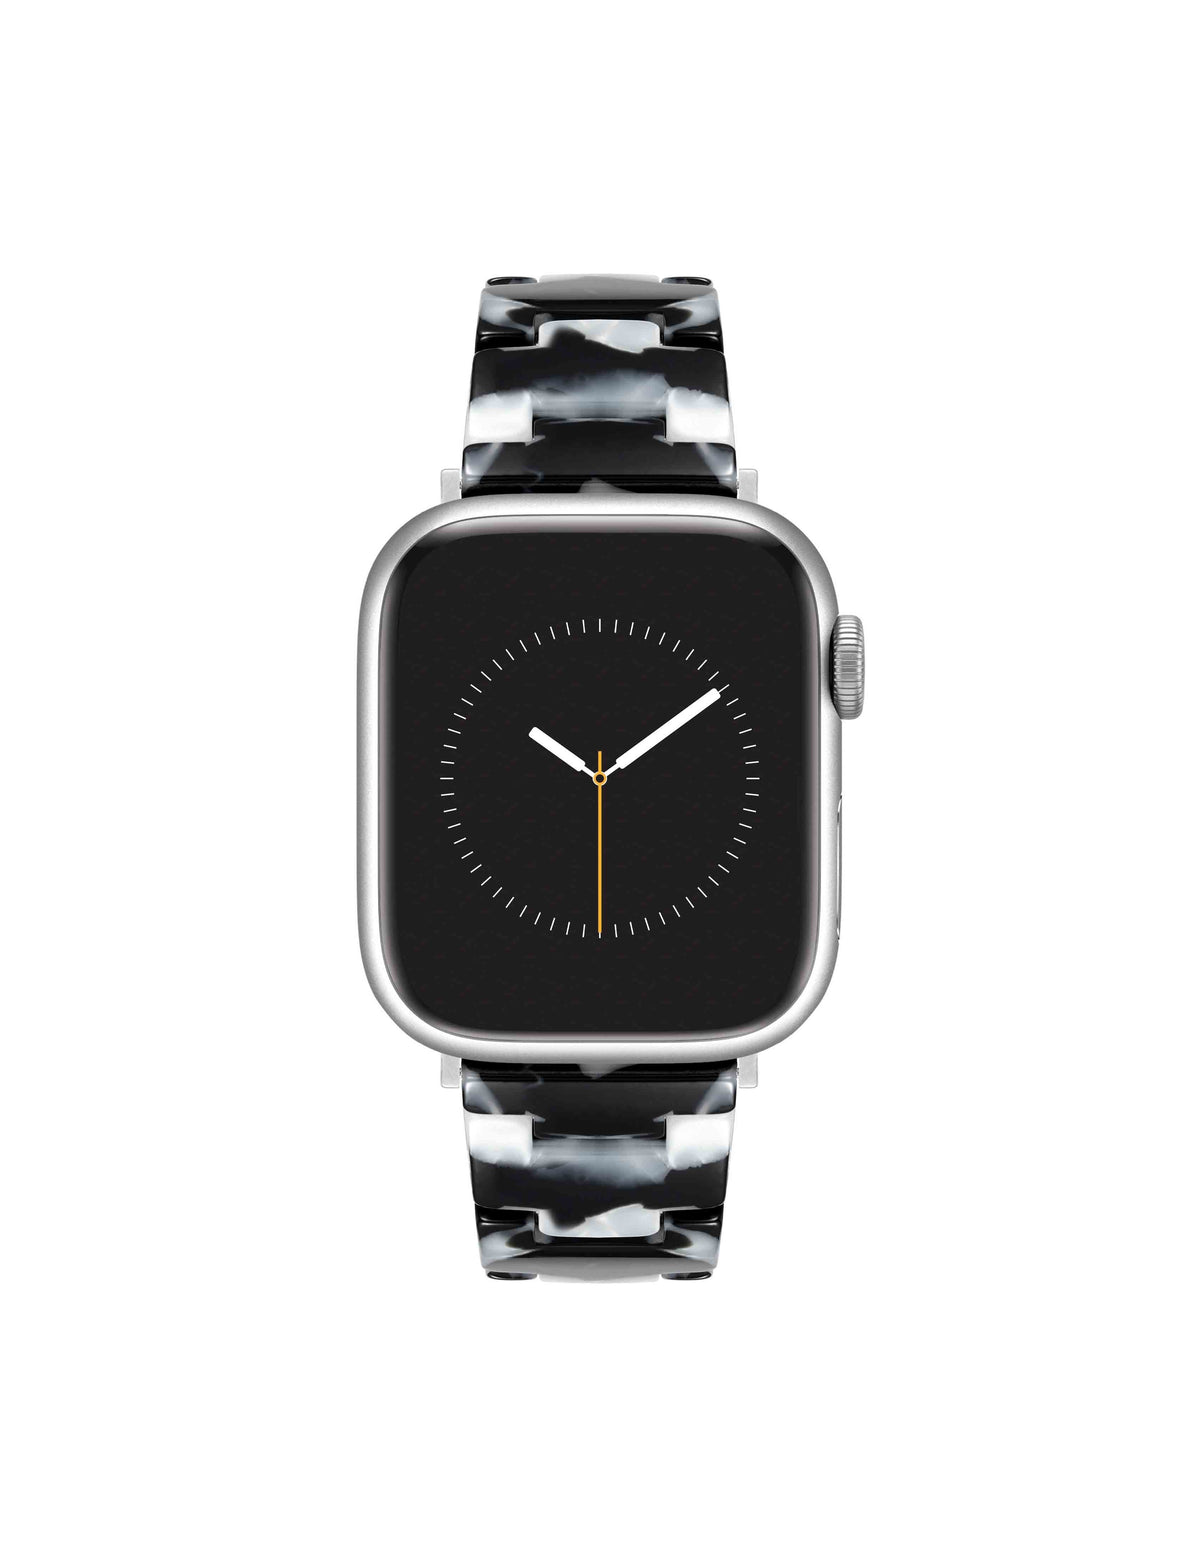 Anne Klein Black/White/Silver-Tone Marbleized Acetate Bracelet Band for Apple Watch®